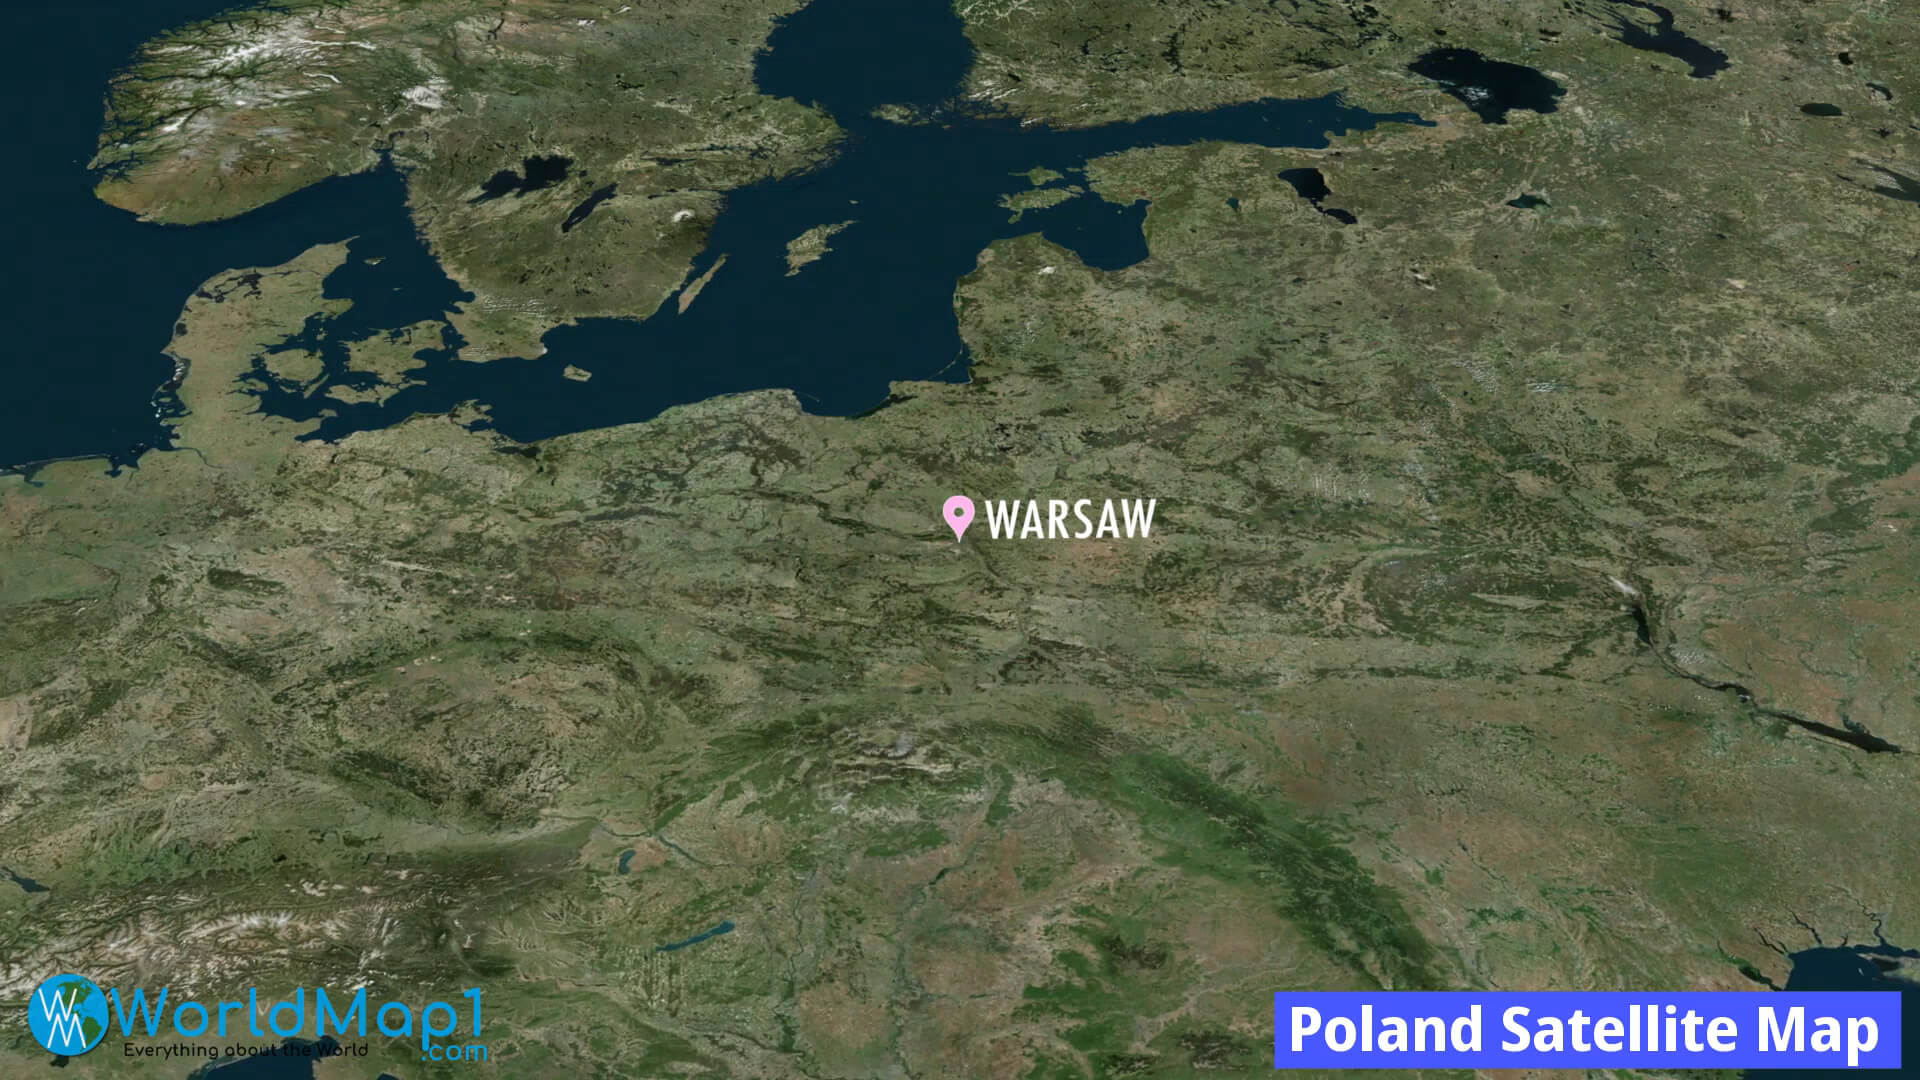 Poland Satellite Map and Warsaw